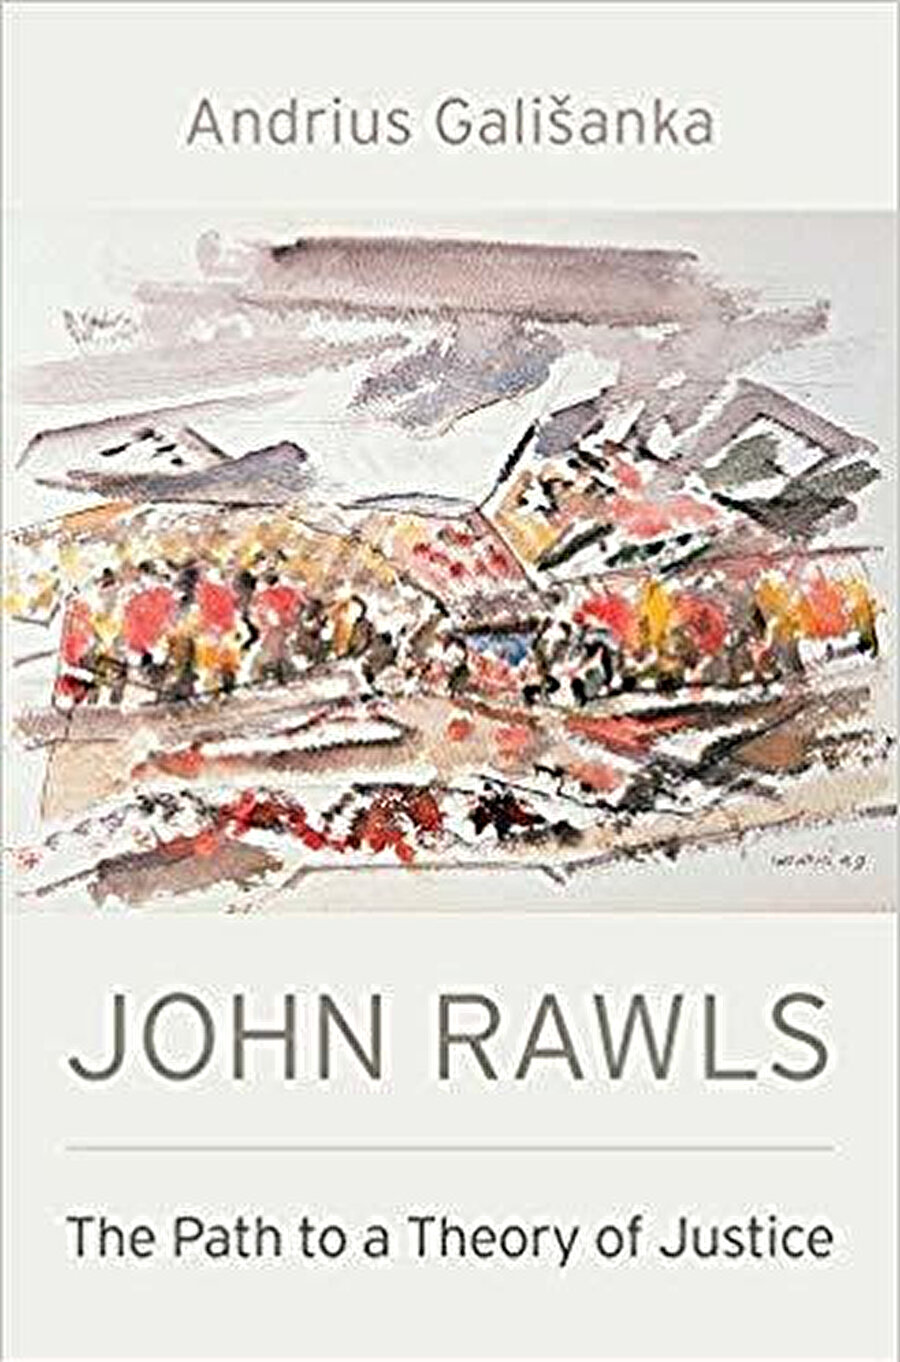 John Rawls: The Path to a Theory of Justice, Andrius Gališanka, Harvard University Press, 2019, 272 s.